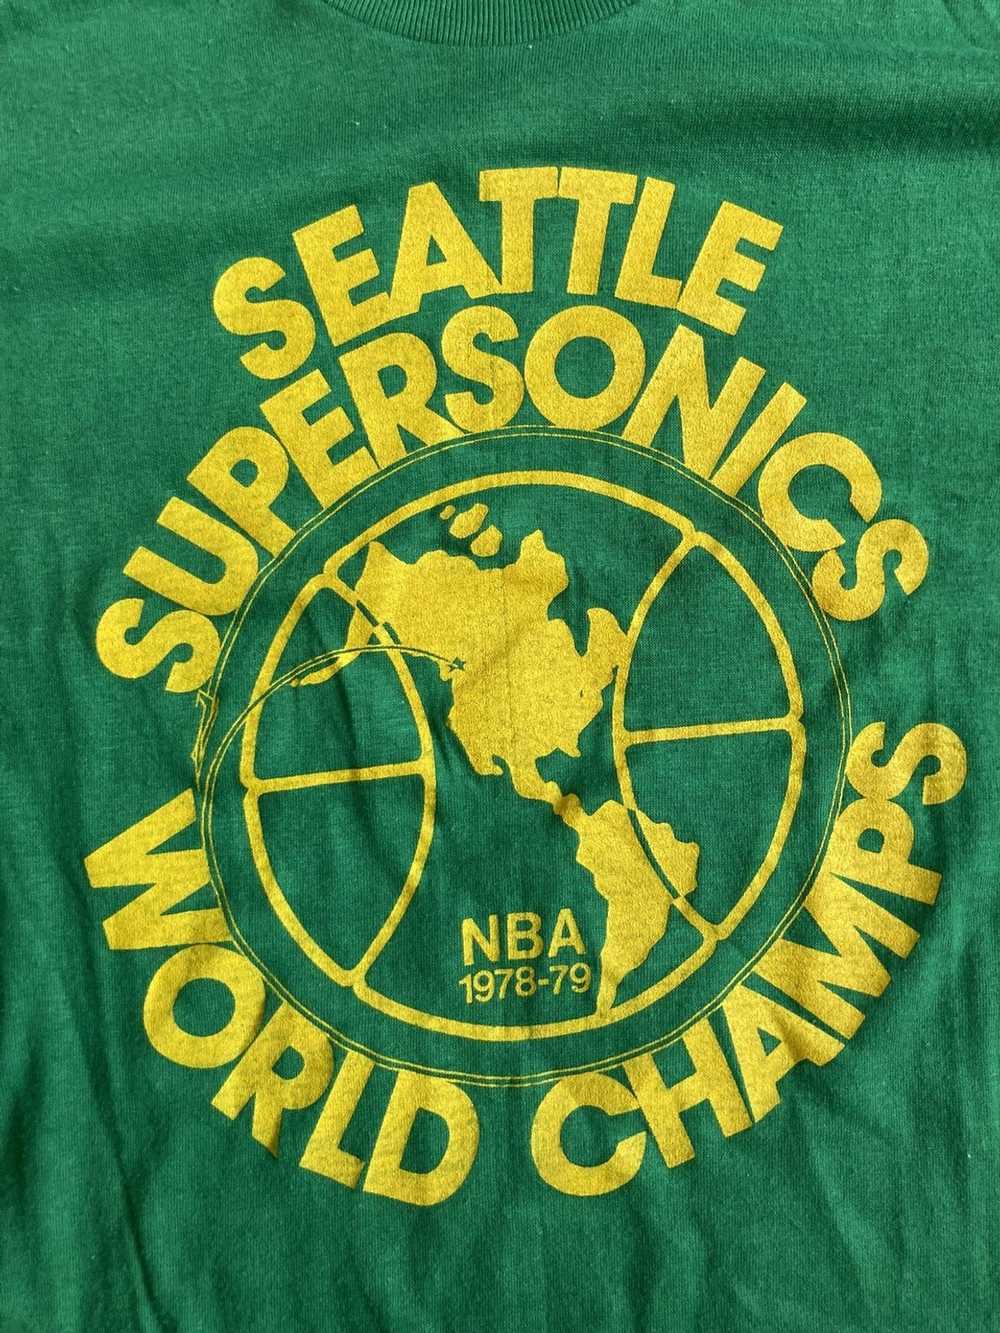 Vintage Vintage Seattle sonics shirt - image 3